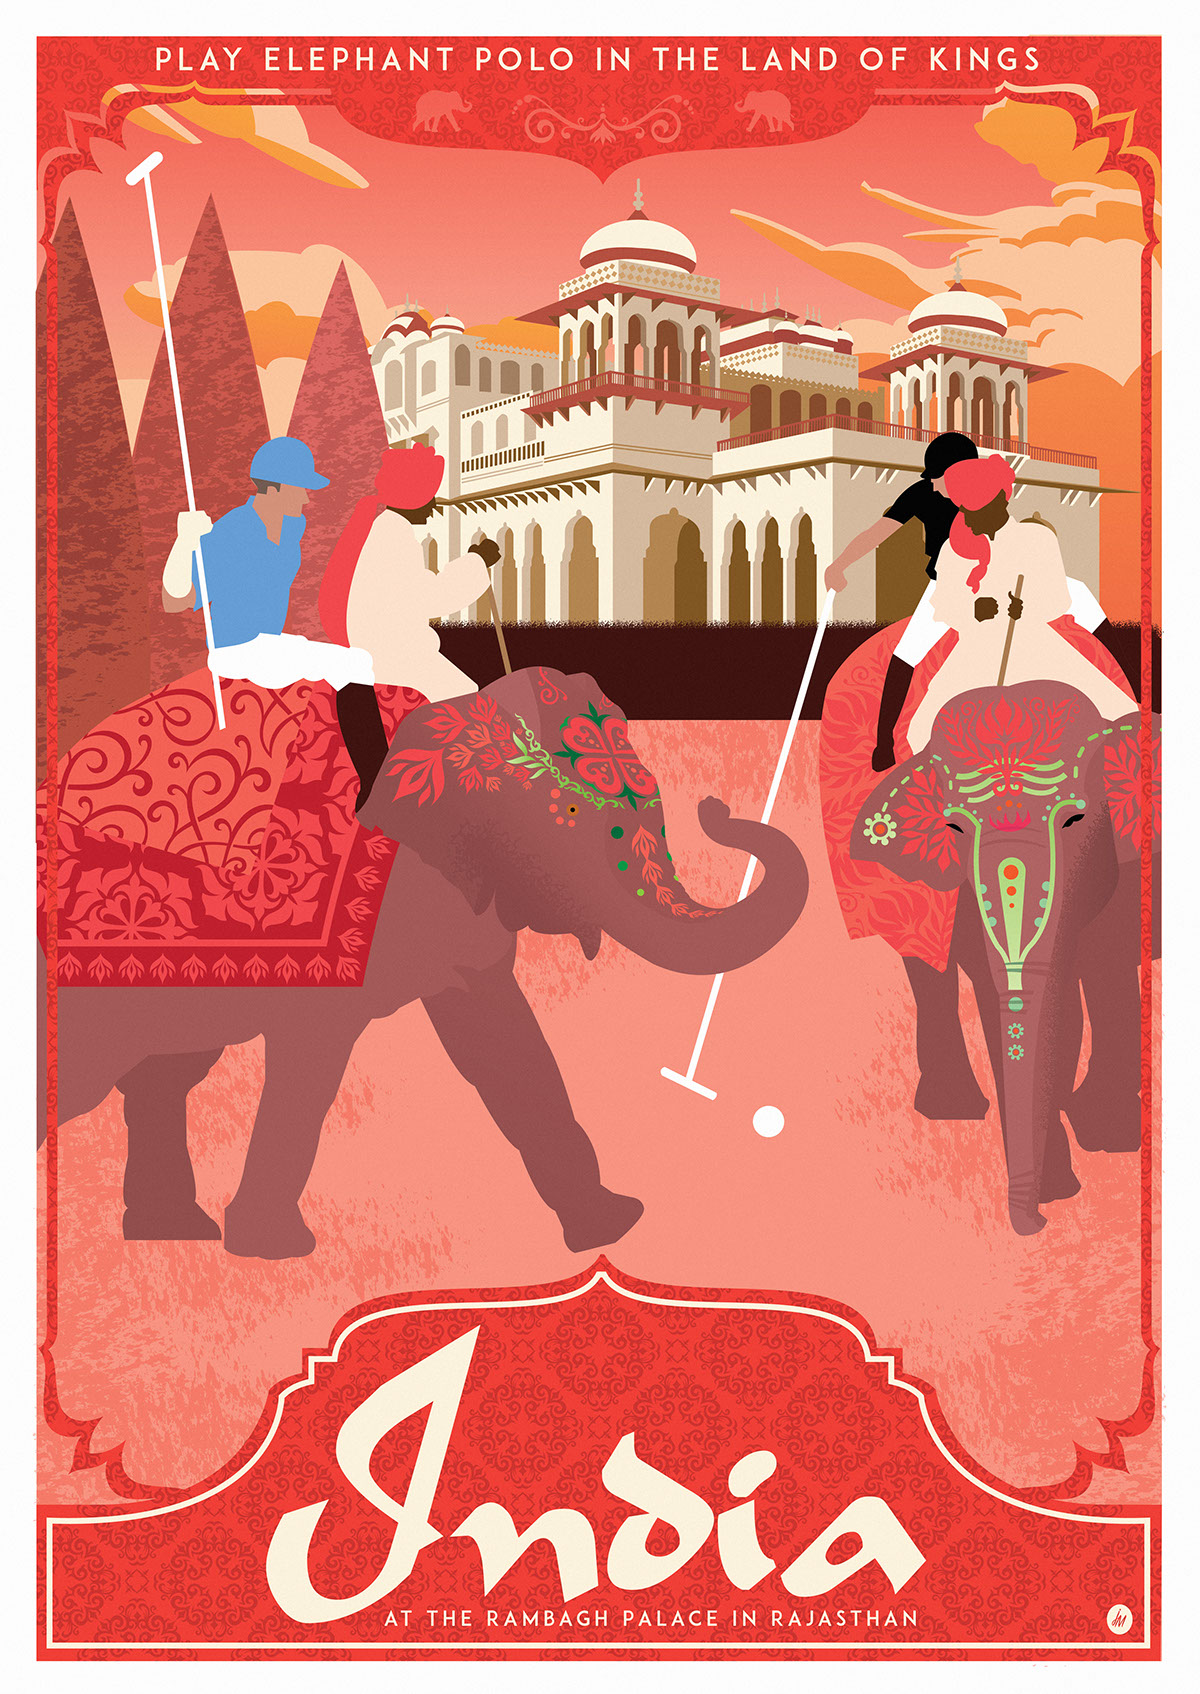 travel poster India elephants polo sports